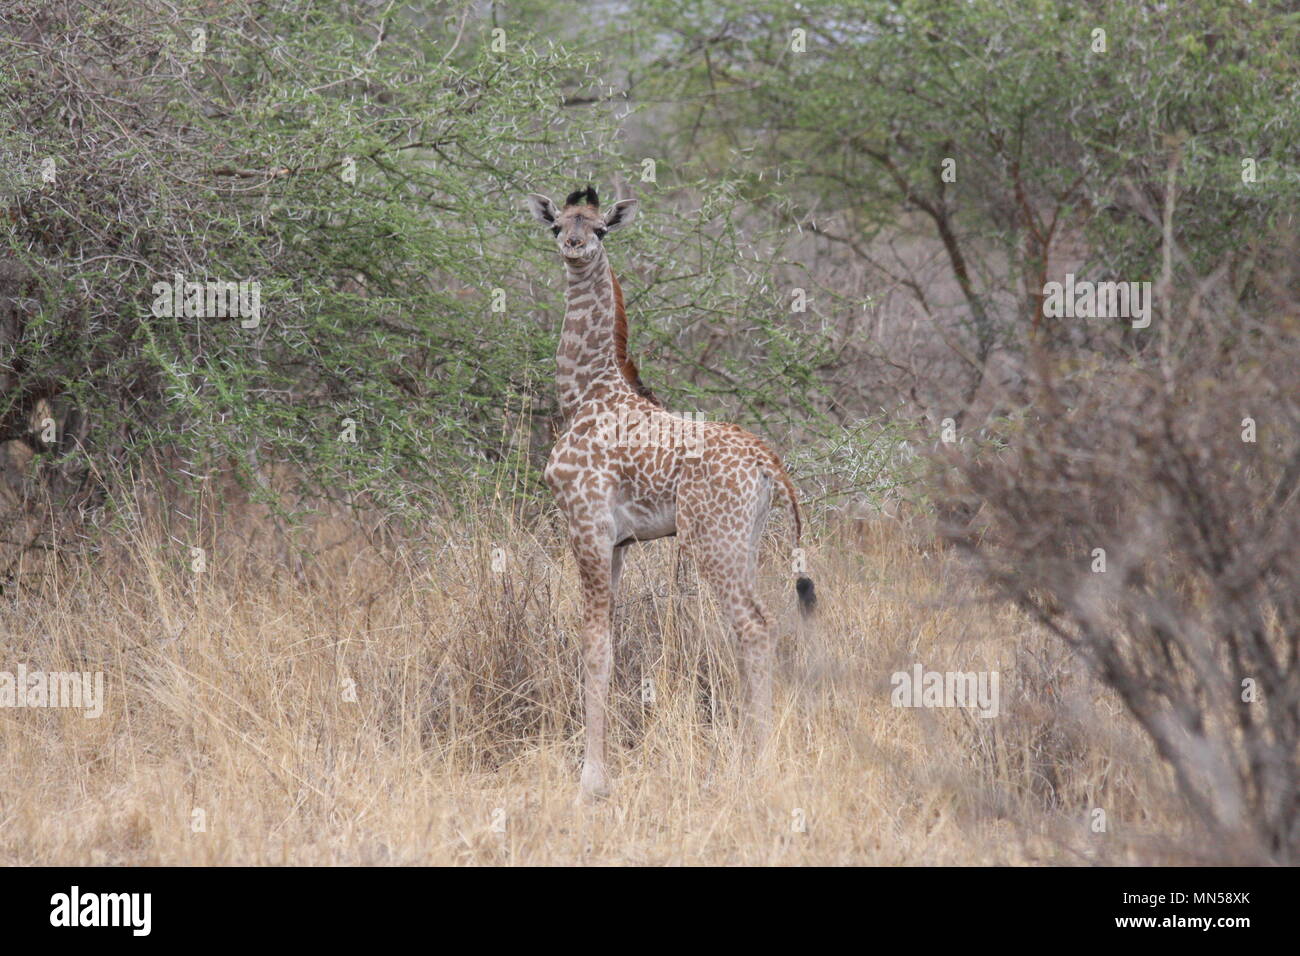 Baby Giraffe seen in the Chyulu Hills, Kenya Stock Photo